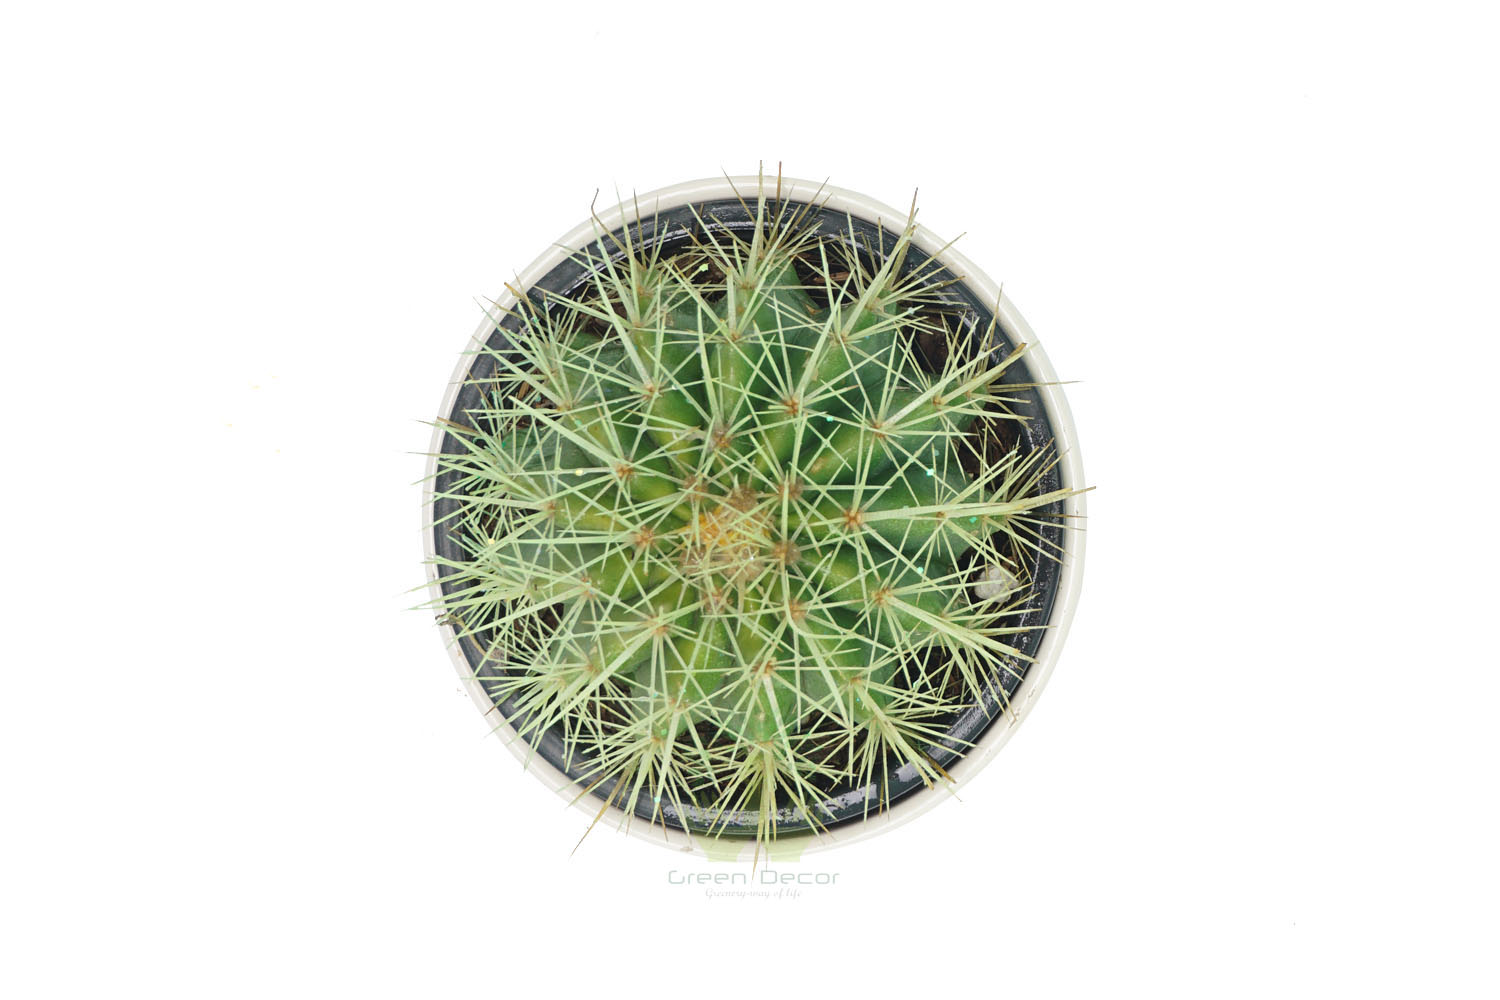 Buy Echinocactus Grusonii Plants , White Pots and seeds in Delhi NCR by the best online nursery shop Greendecor.